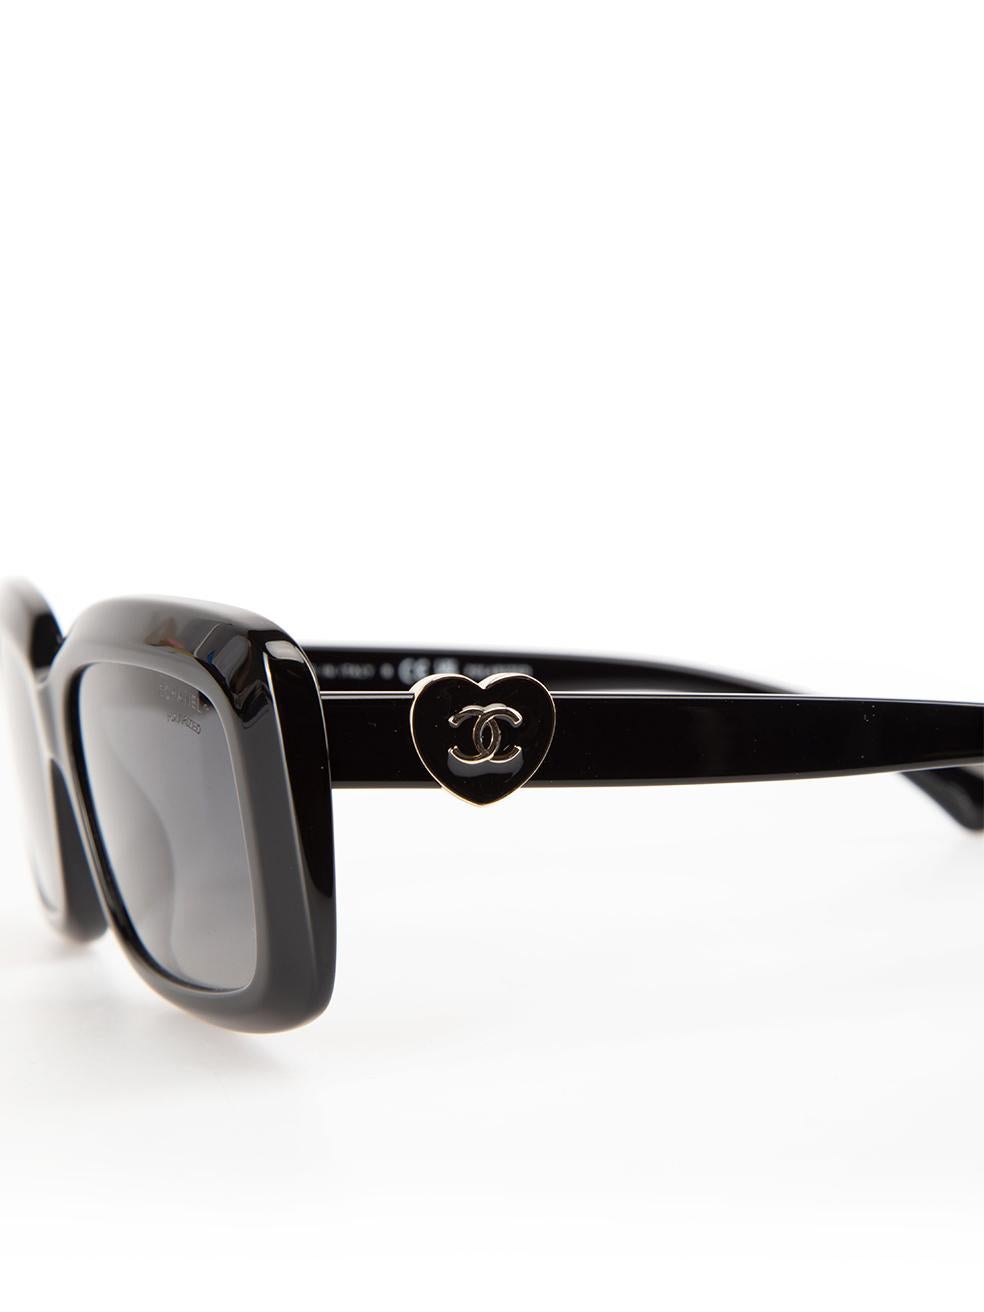 Chanel Black Heart Logo Rectangle Sunglasses For Sale 2